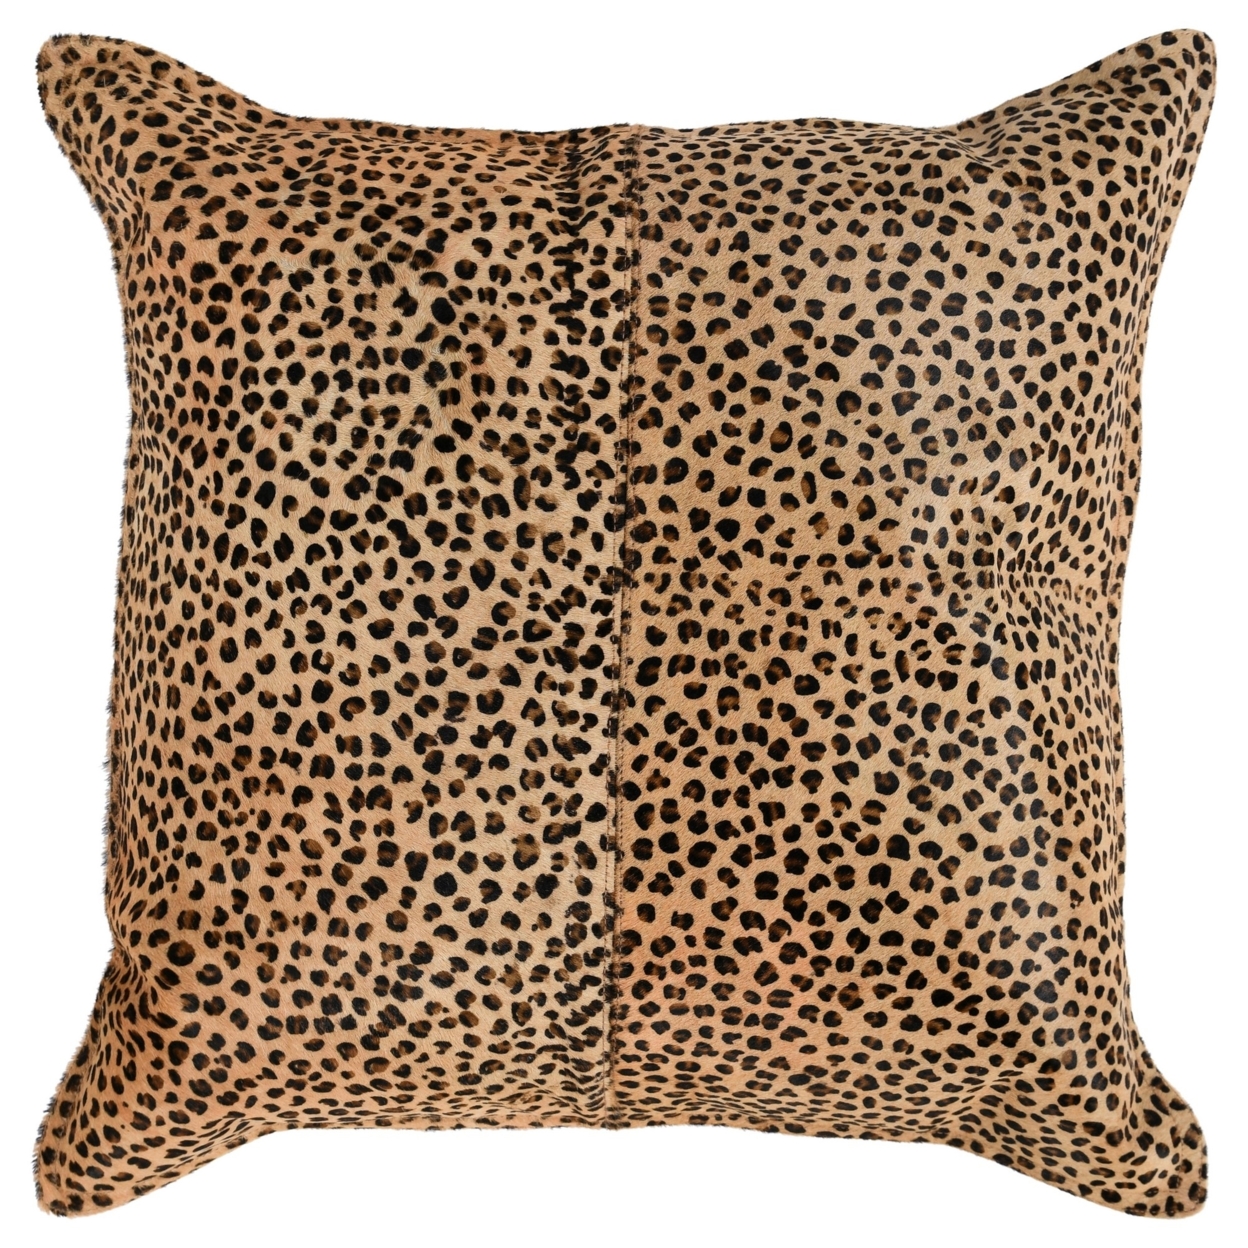 20 X 20 Leather Accent Throw Pillow, Leopard Print Beige Black, Down Insert- Saltoro Sherpi